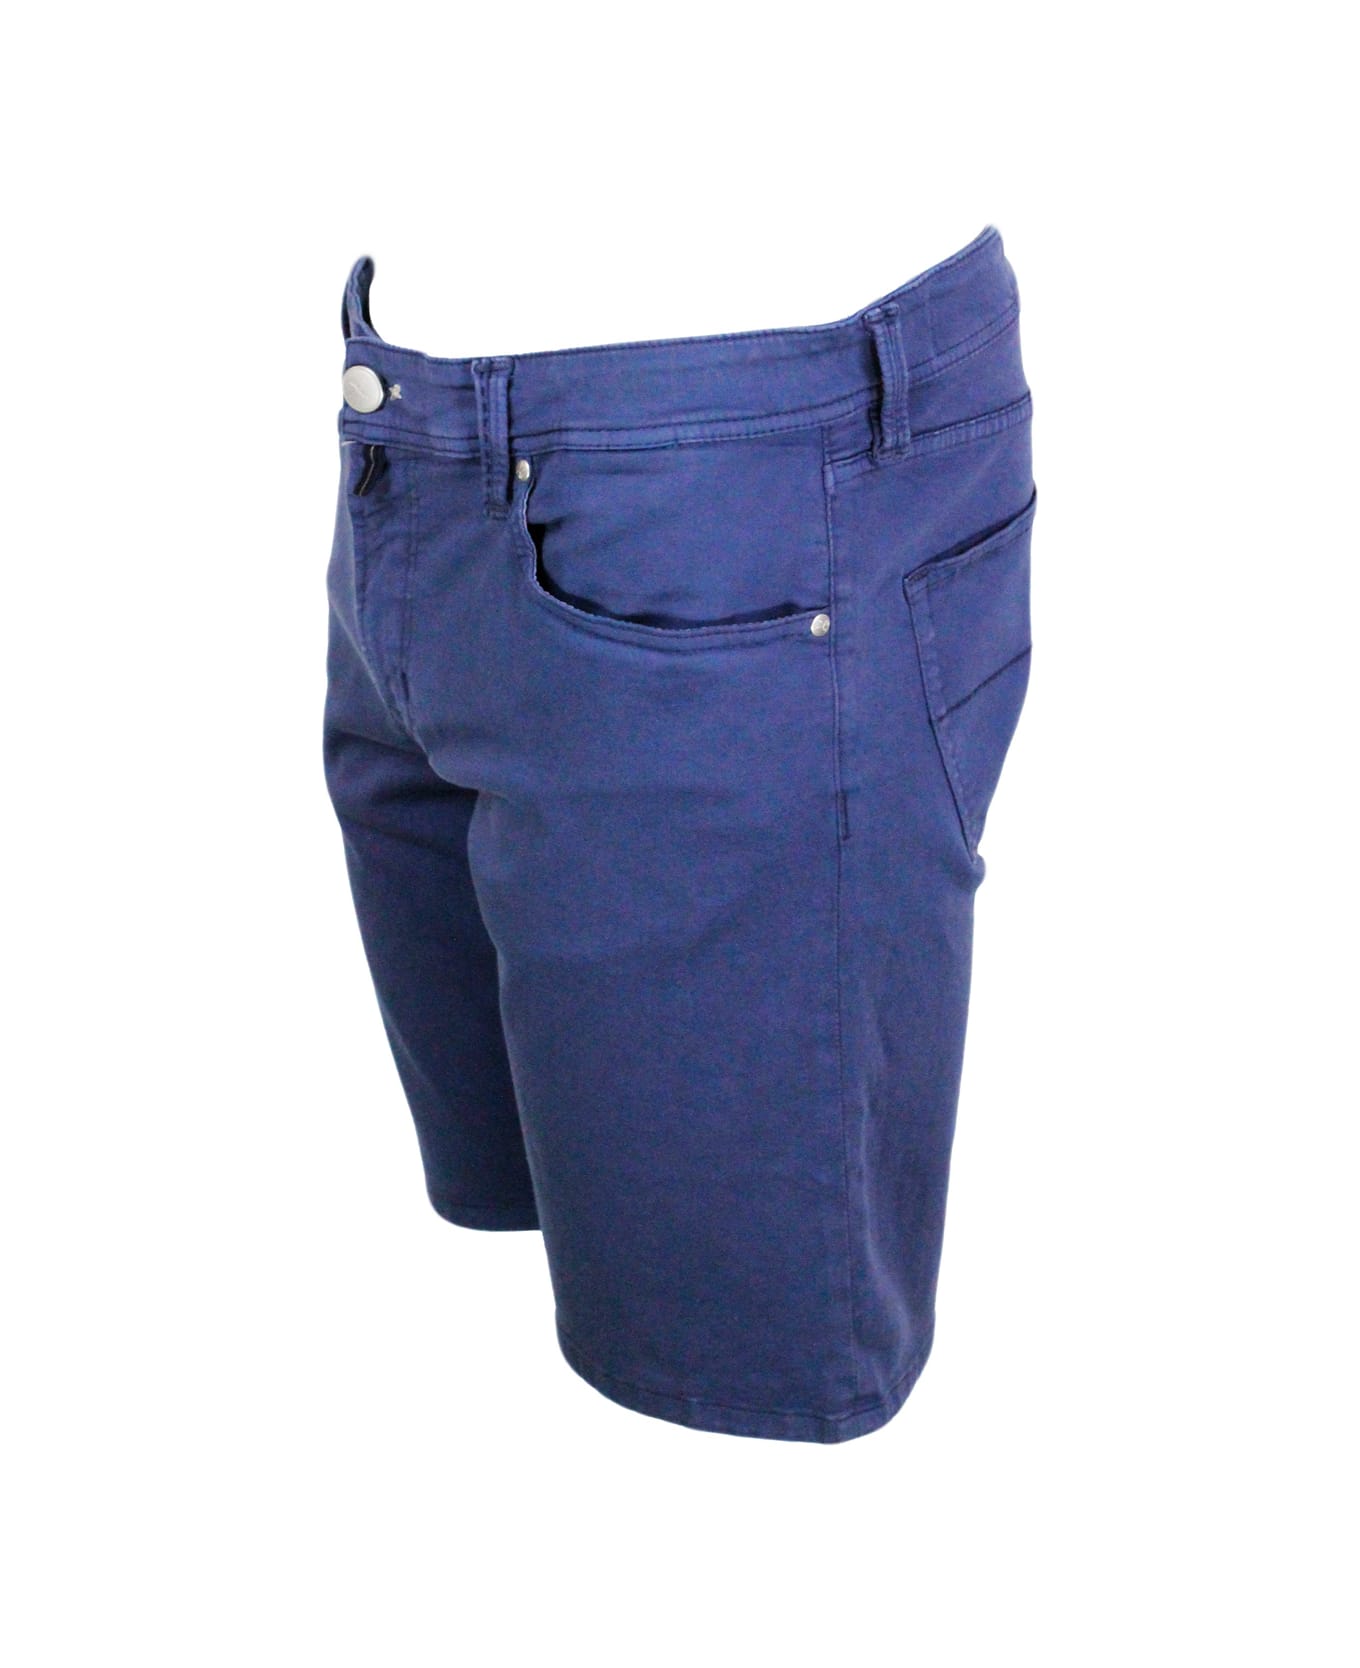 Sartoria Tramarossa Ascanio Slim Bermuda Shorts In Super Stretch Cotton Gabardine With 5 Pockets And Tailored Stitching - Blu light ショートパンツ